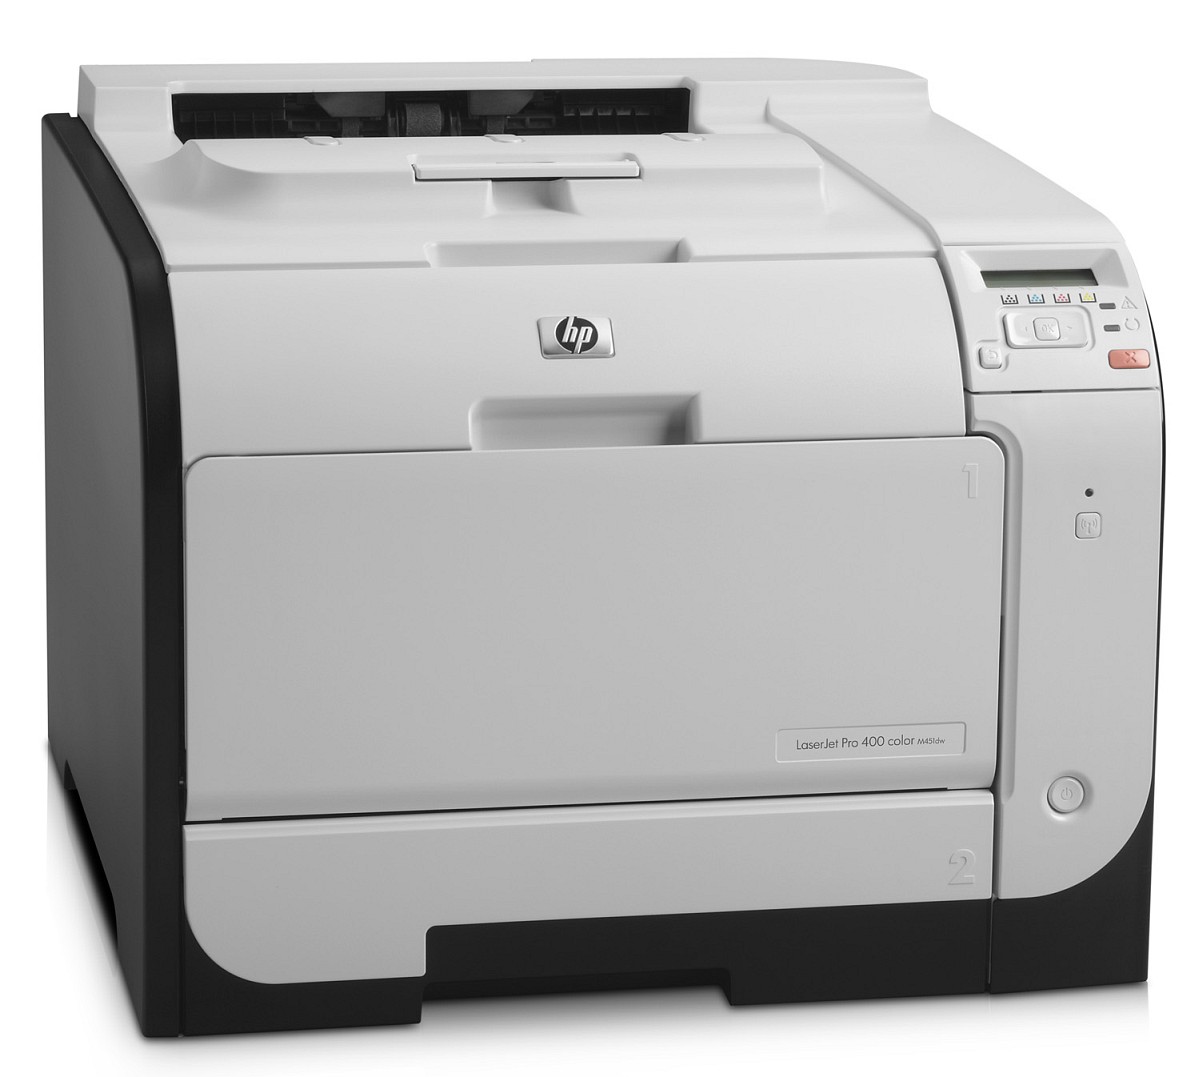 HP LaserJet Pro 400 M451dw (CE958A)